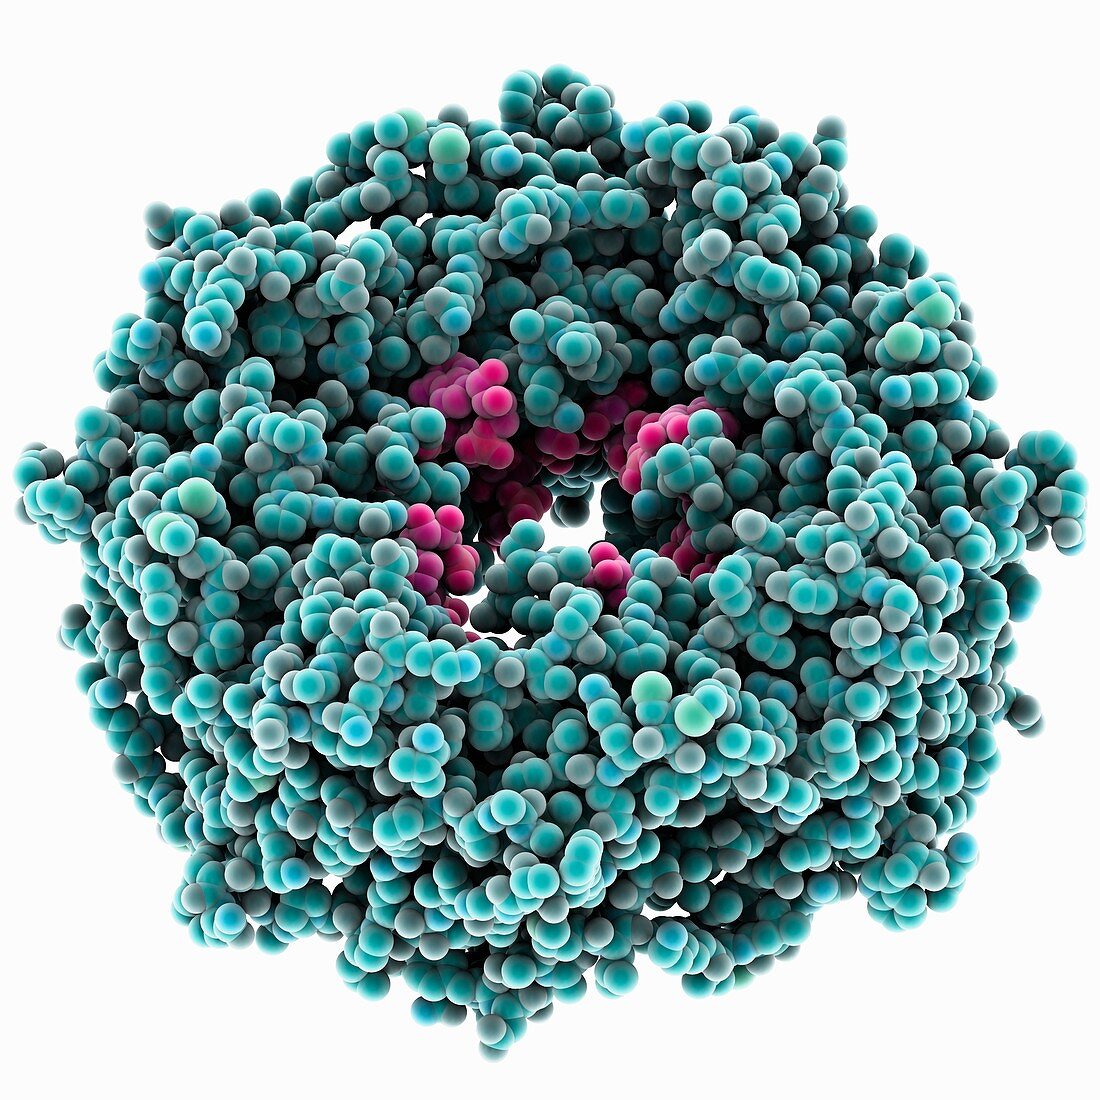 Ebola virus matrix protein RNA complex